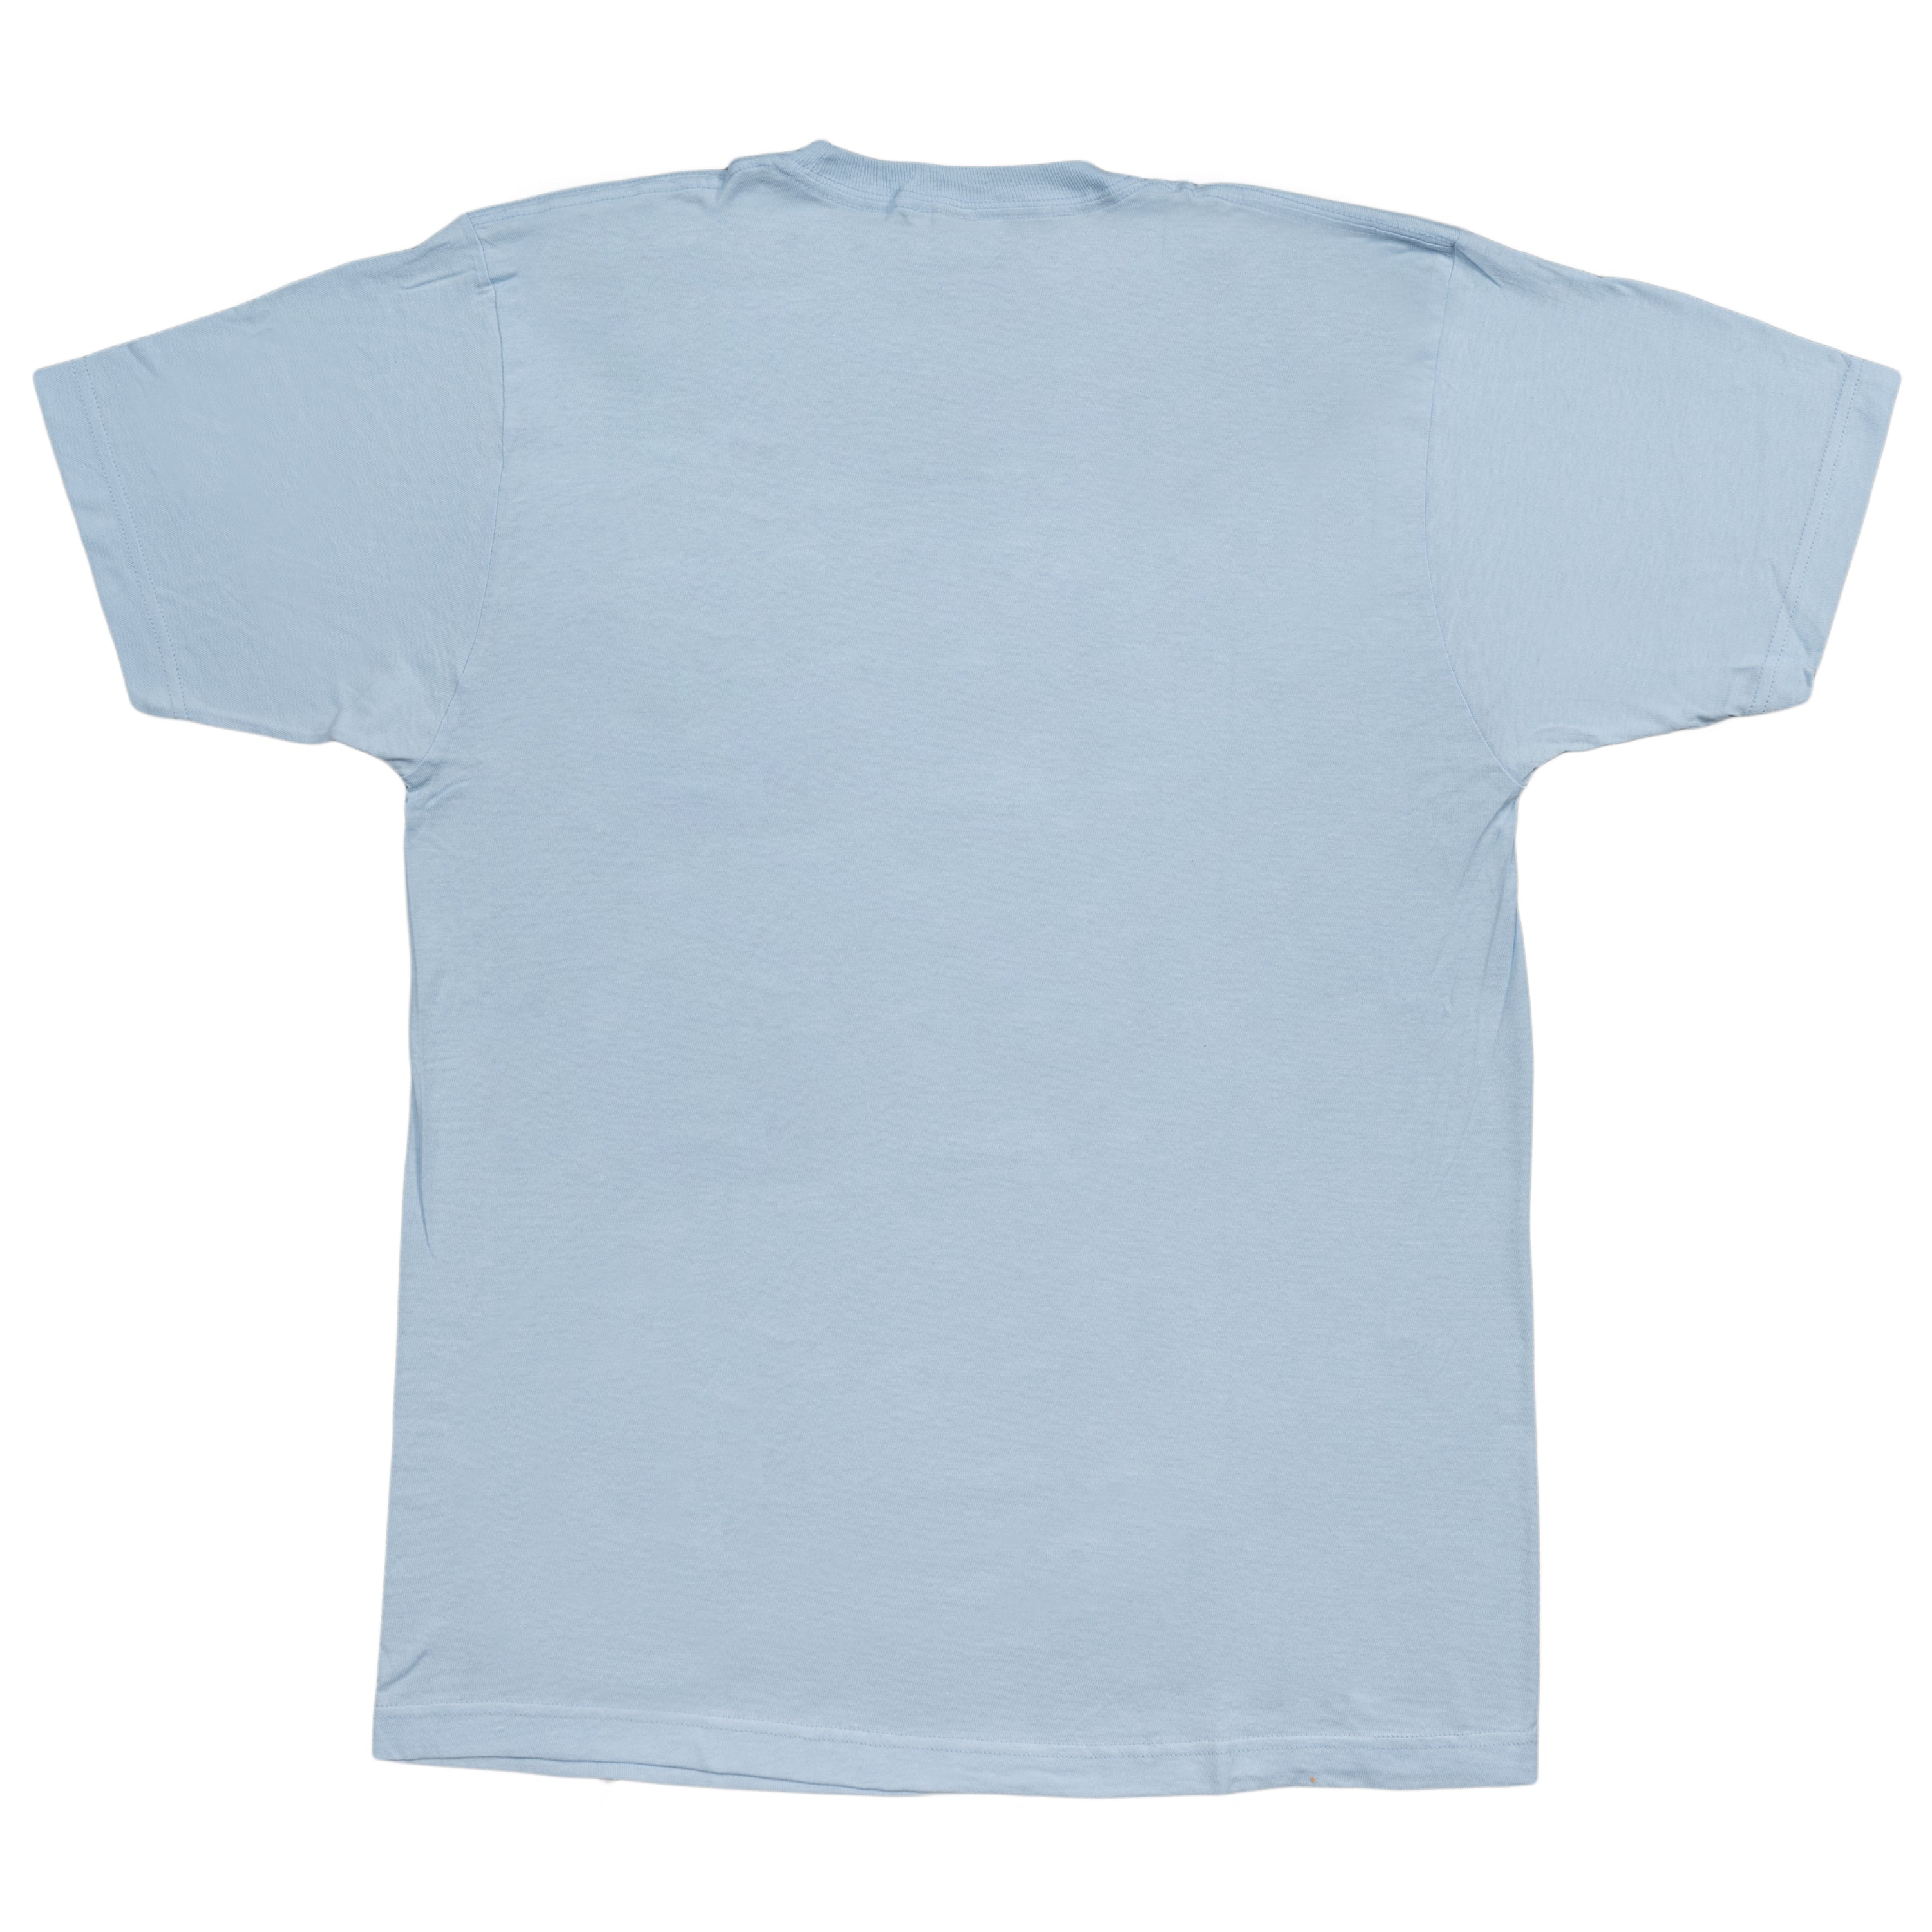 Miami Vice Distressed Logo Adult Light Blue T-Shirt